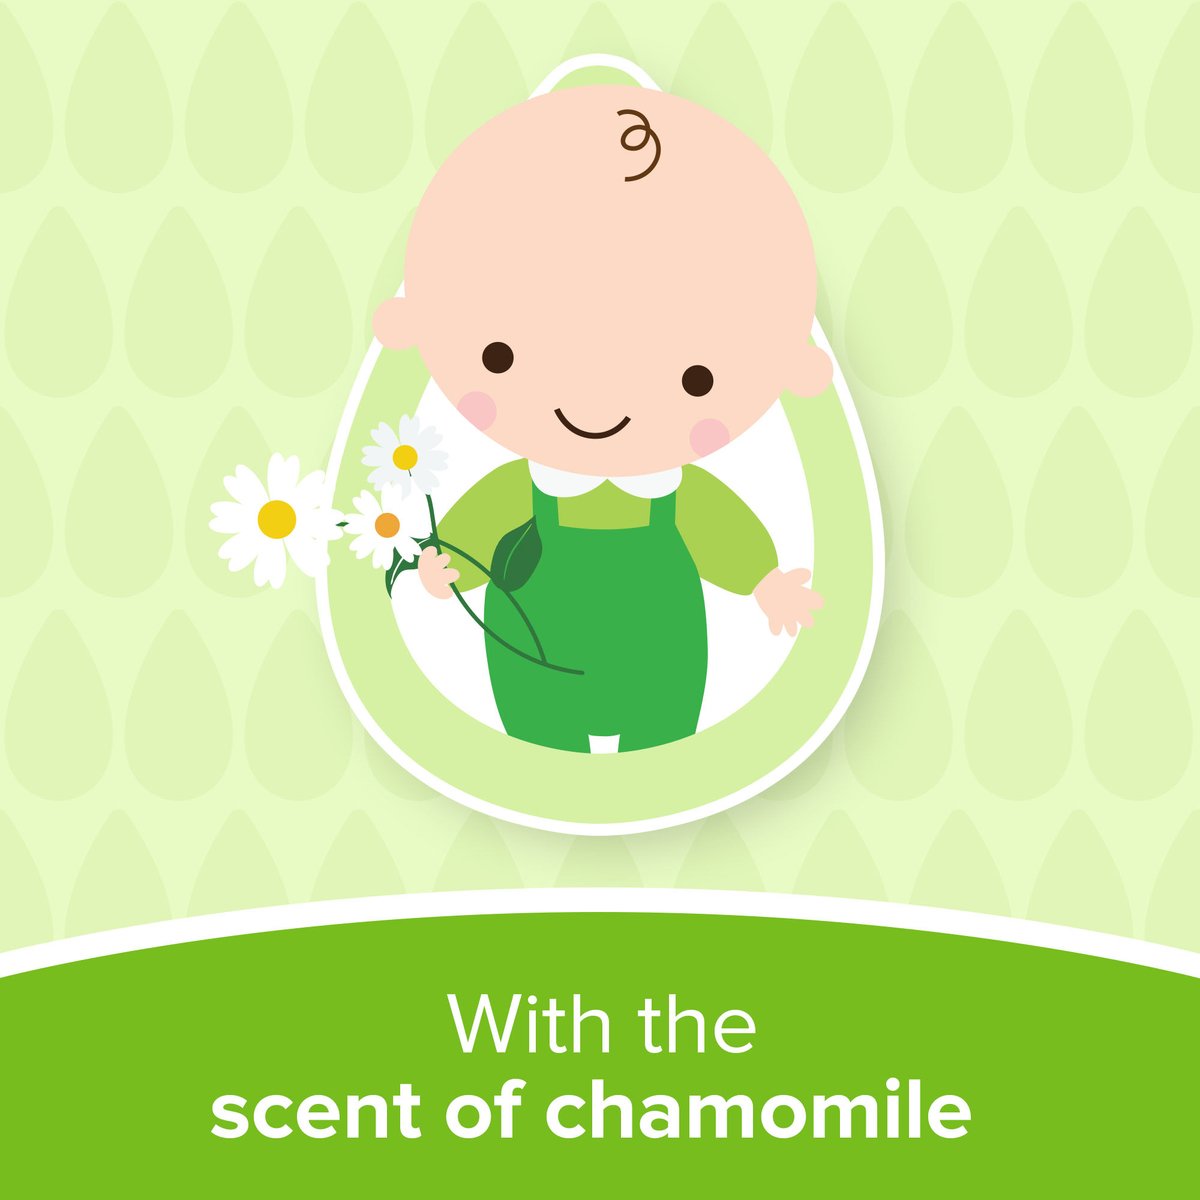 Johnson's Shampoo Chamomile Baby Shampoo, 500 ml